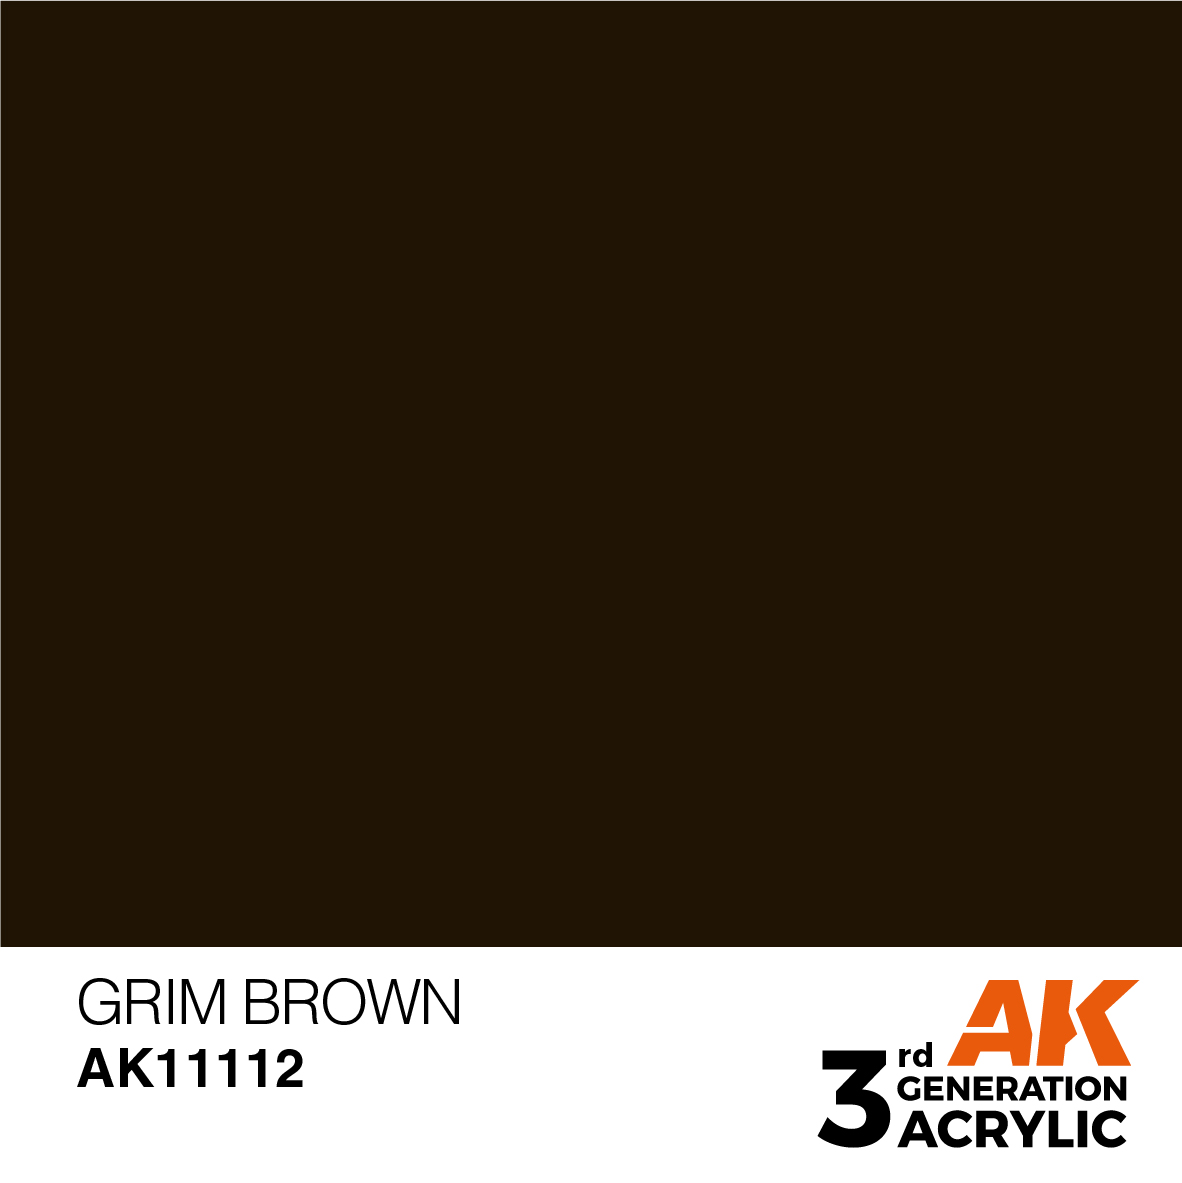 GRIM BROWN – STANDARD